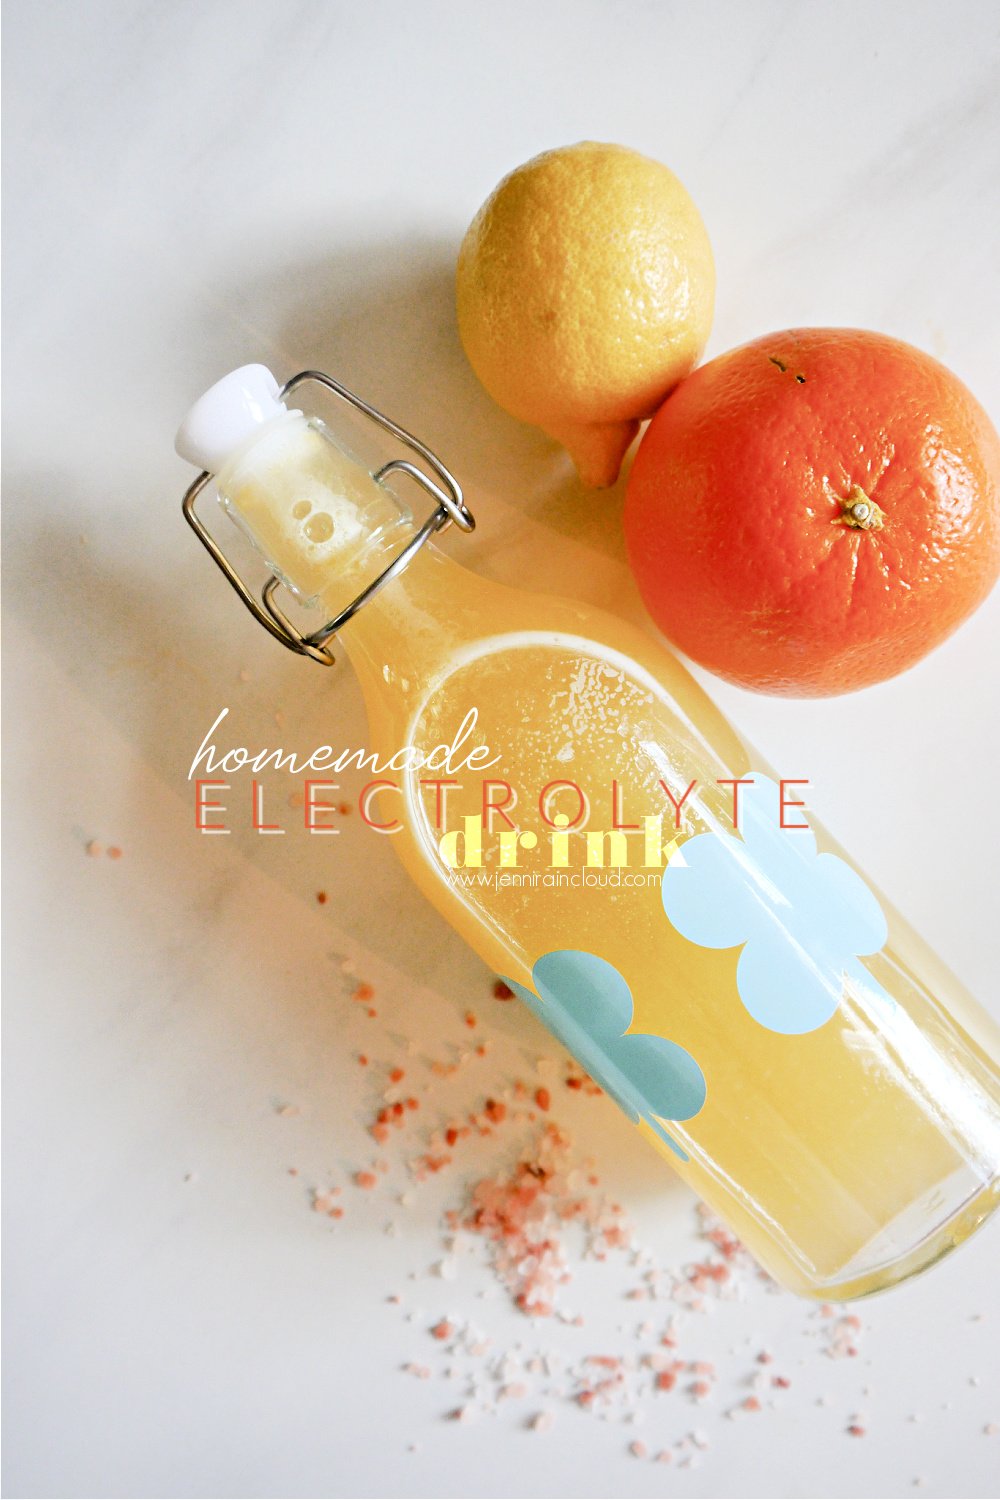 Homemade Electrolyte Drink 